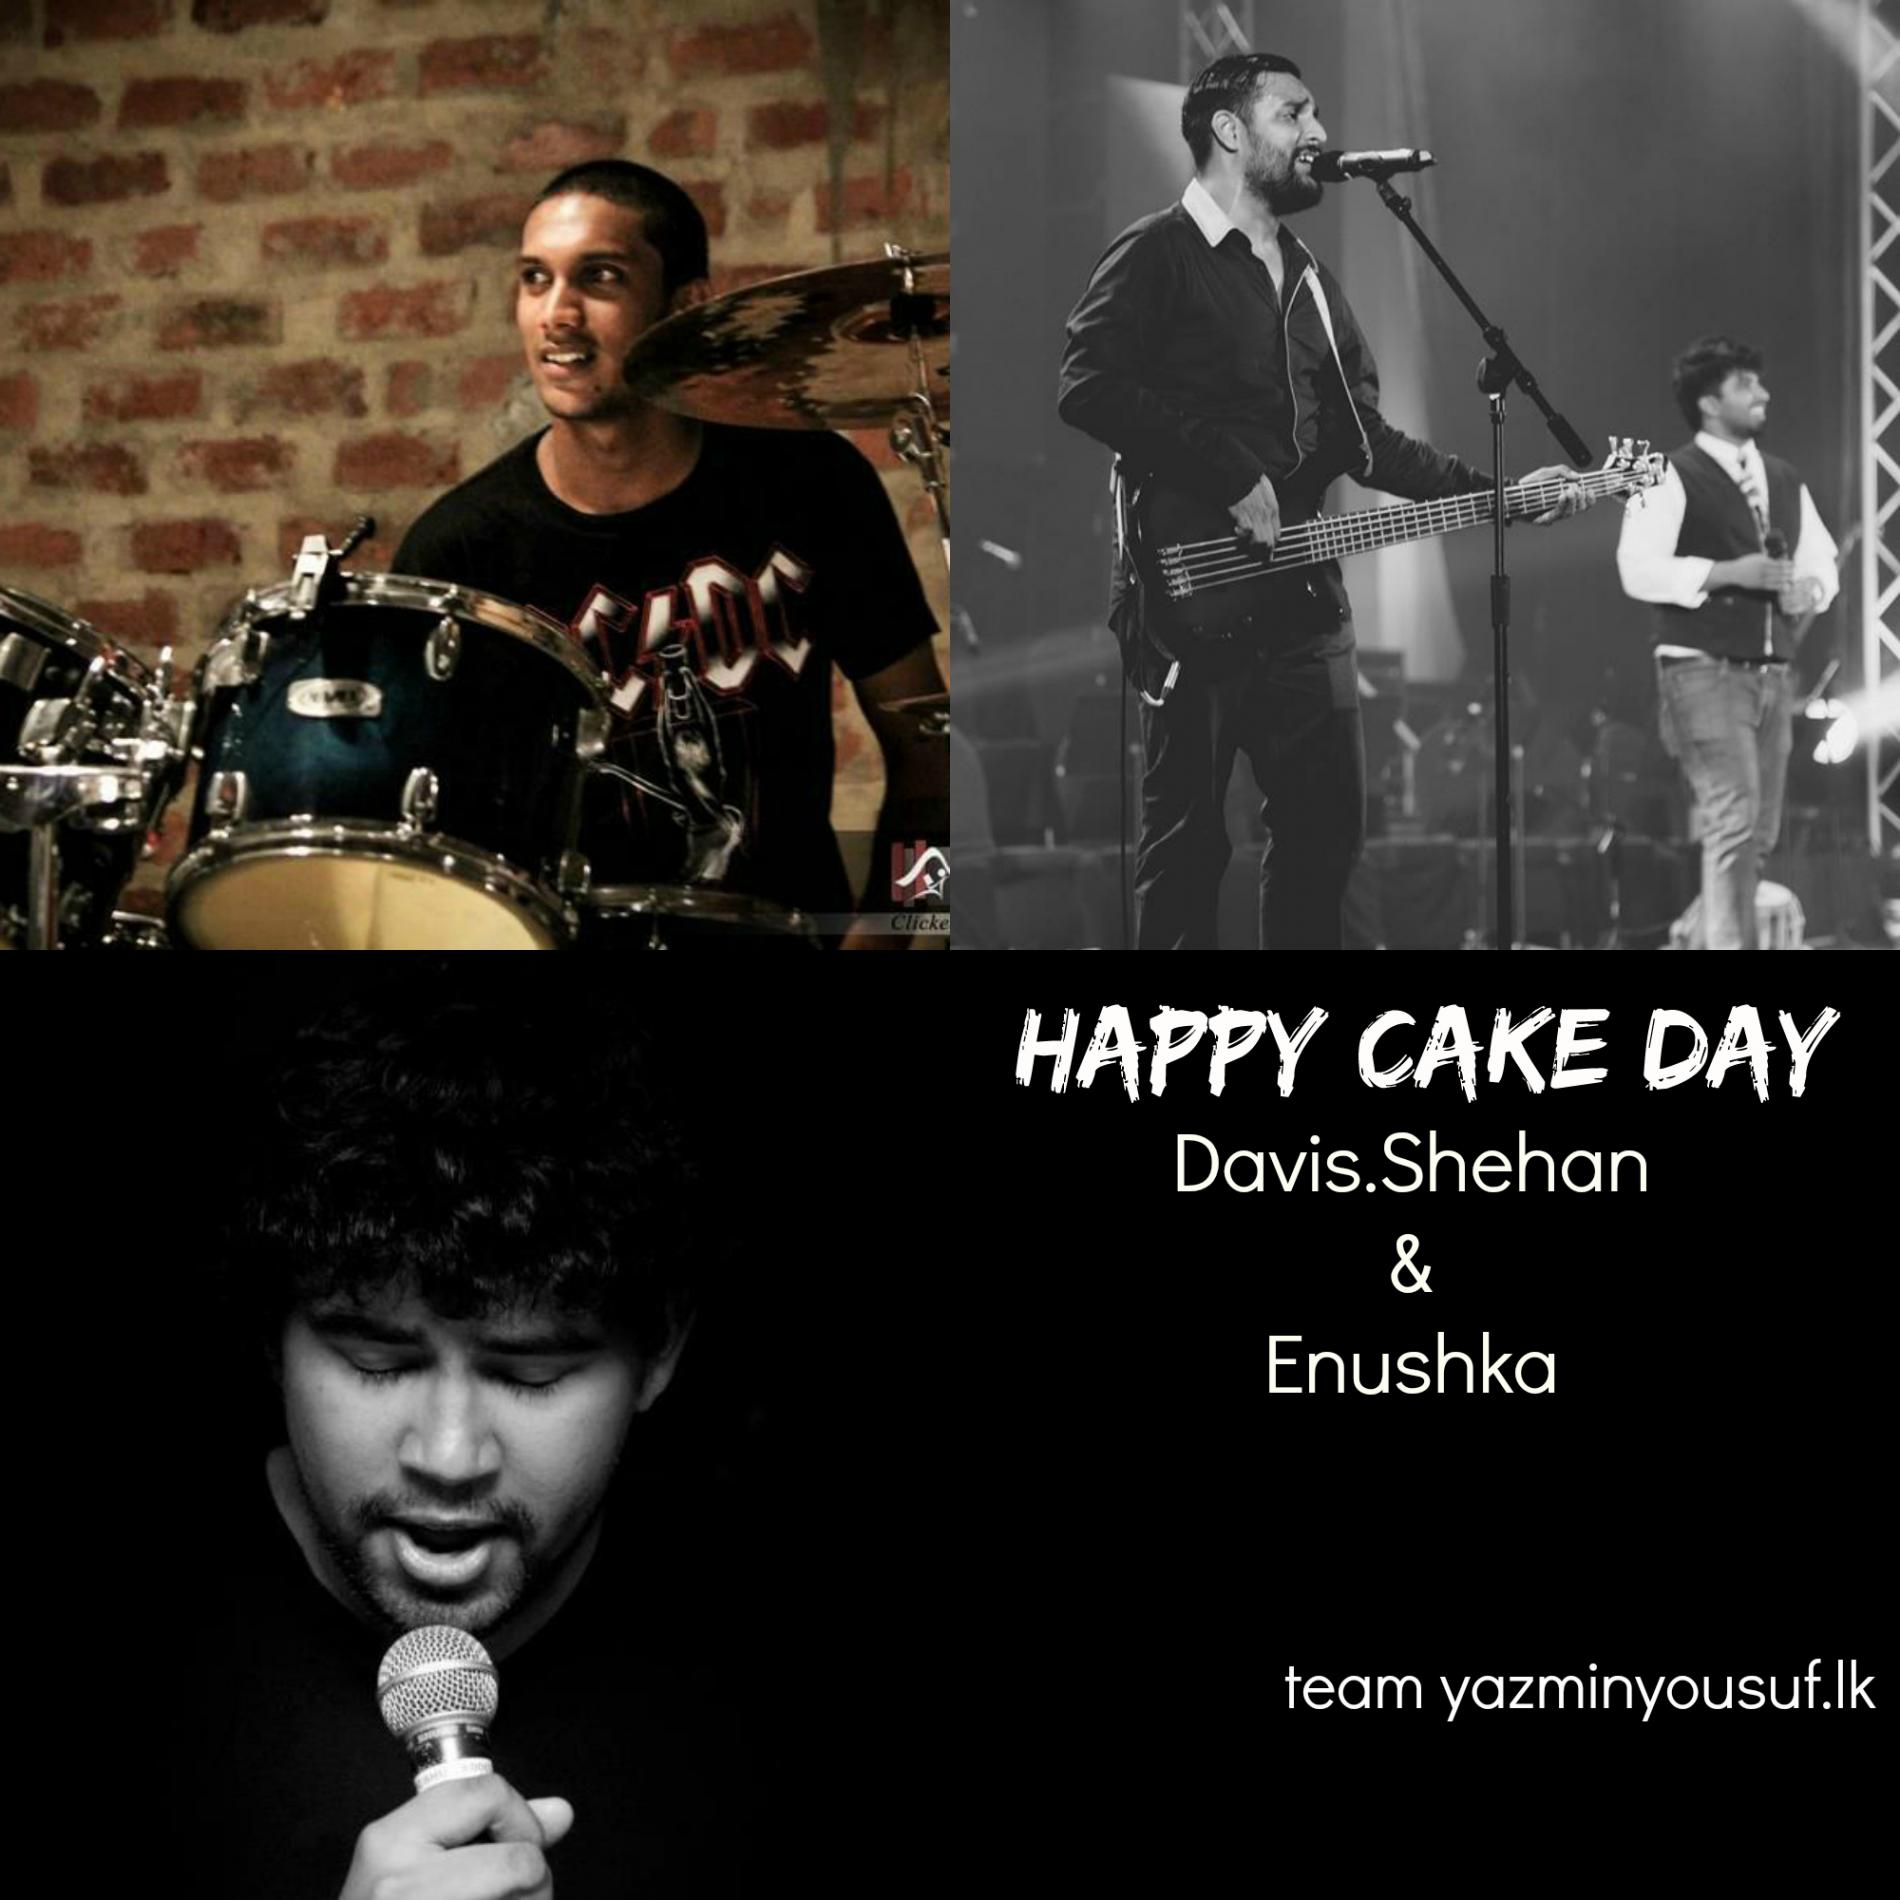 Happy Cake Day To Shehan, Davis And Enushka